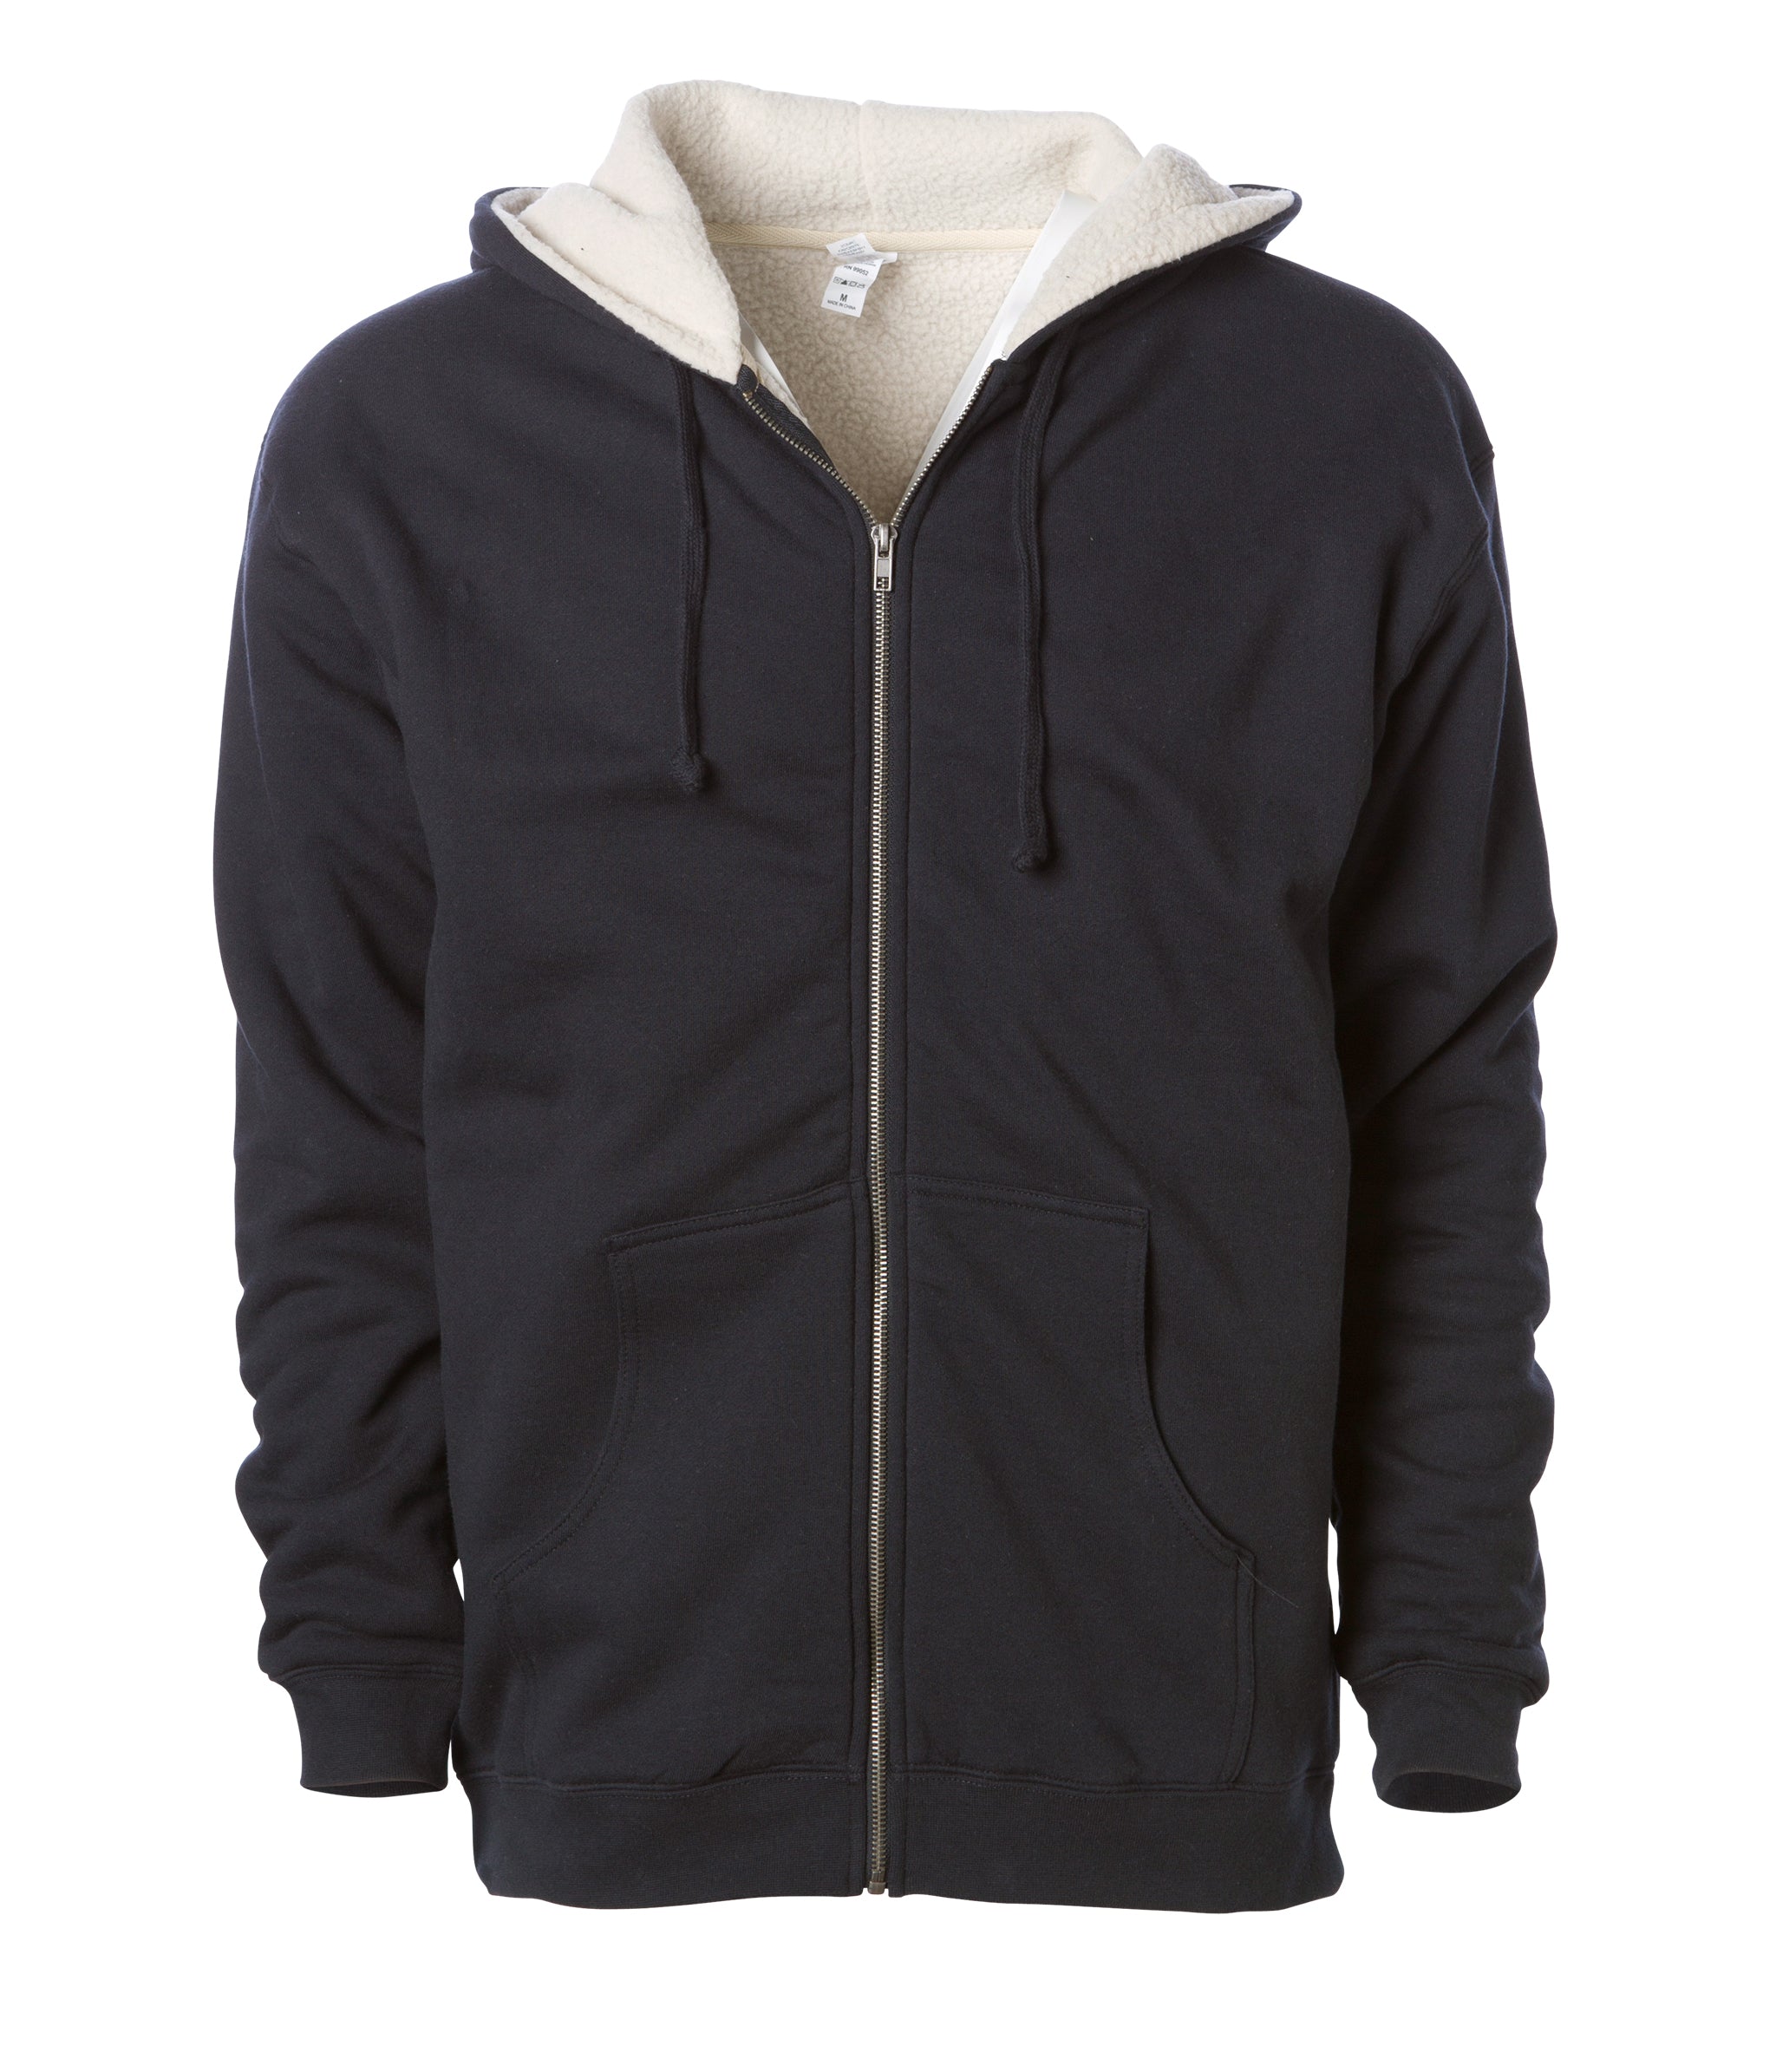 Sherpa Lined Zip Hooded Sweatshirt